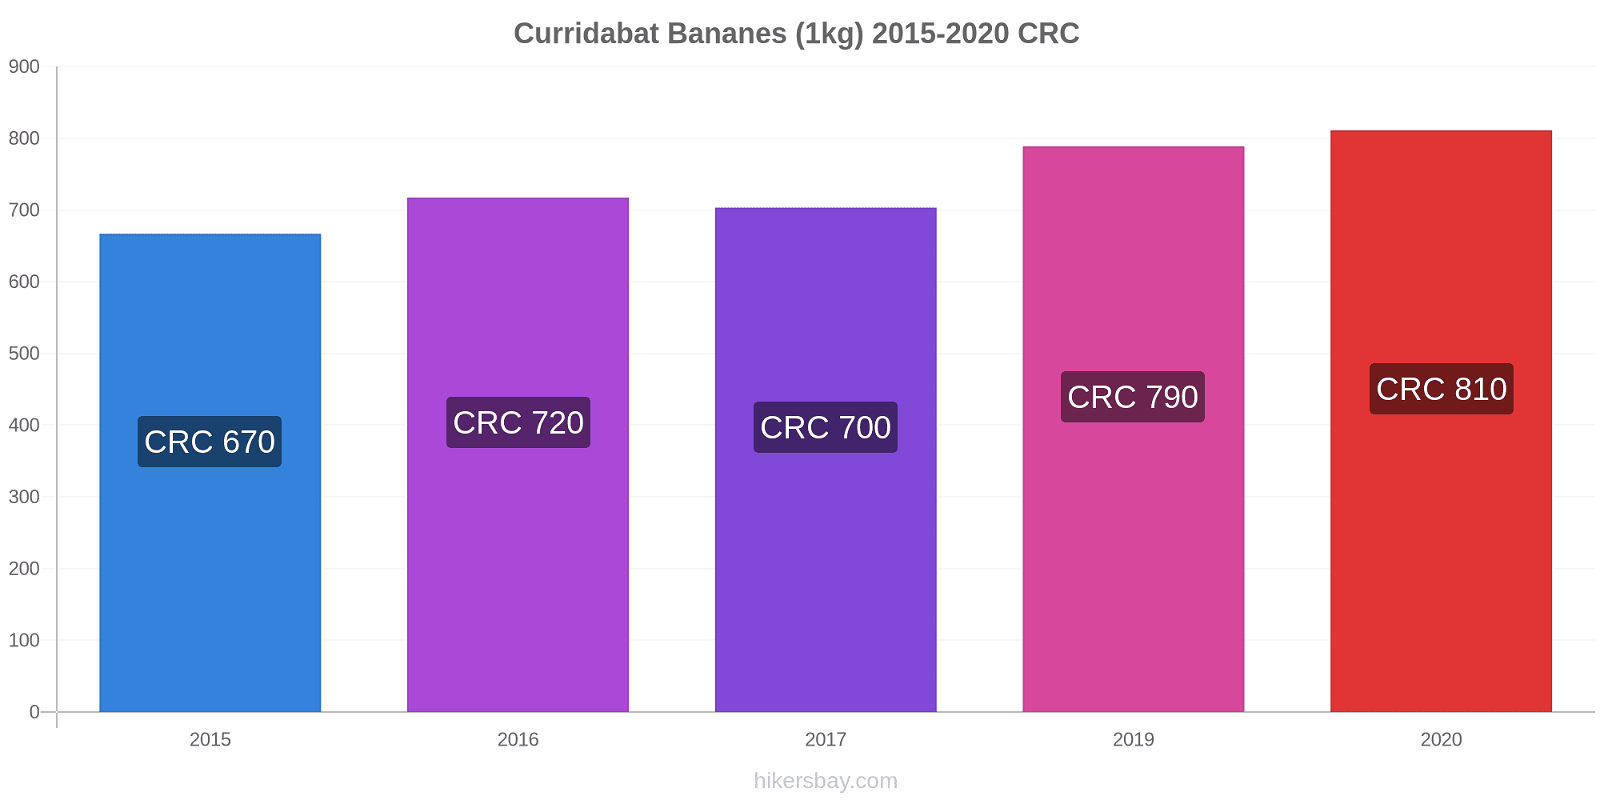 Curridabat changements de prix Bananes (1kg) hikersbay.com